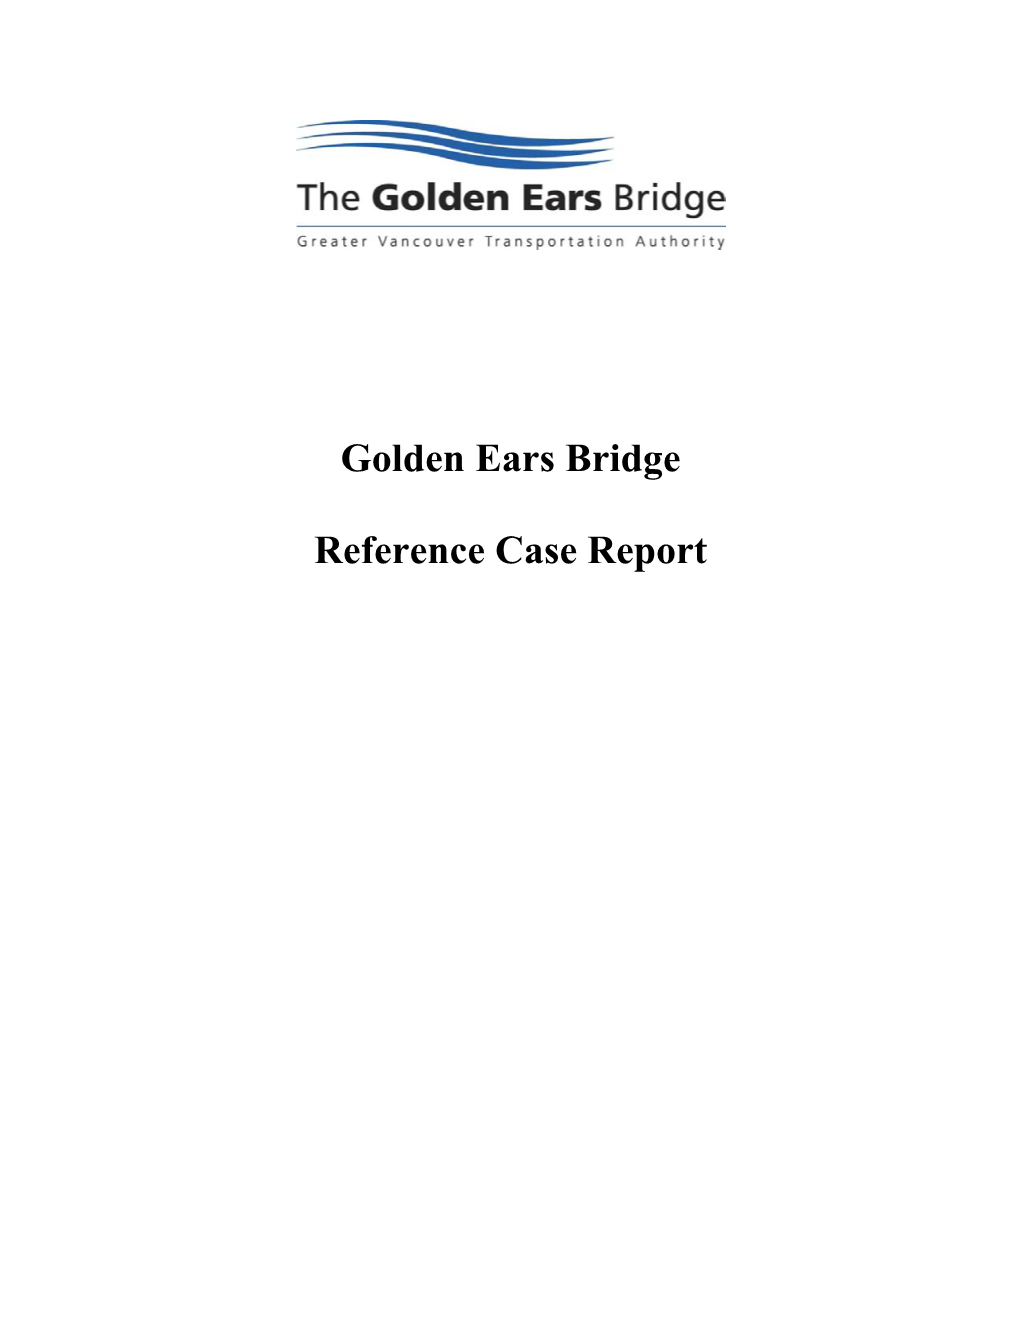 Golden Ears Bridge Reference Case Report